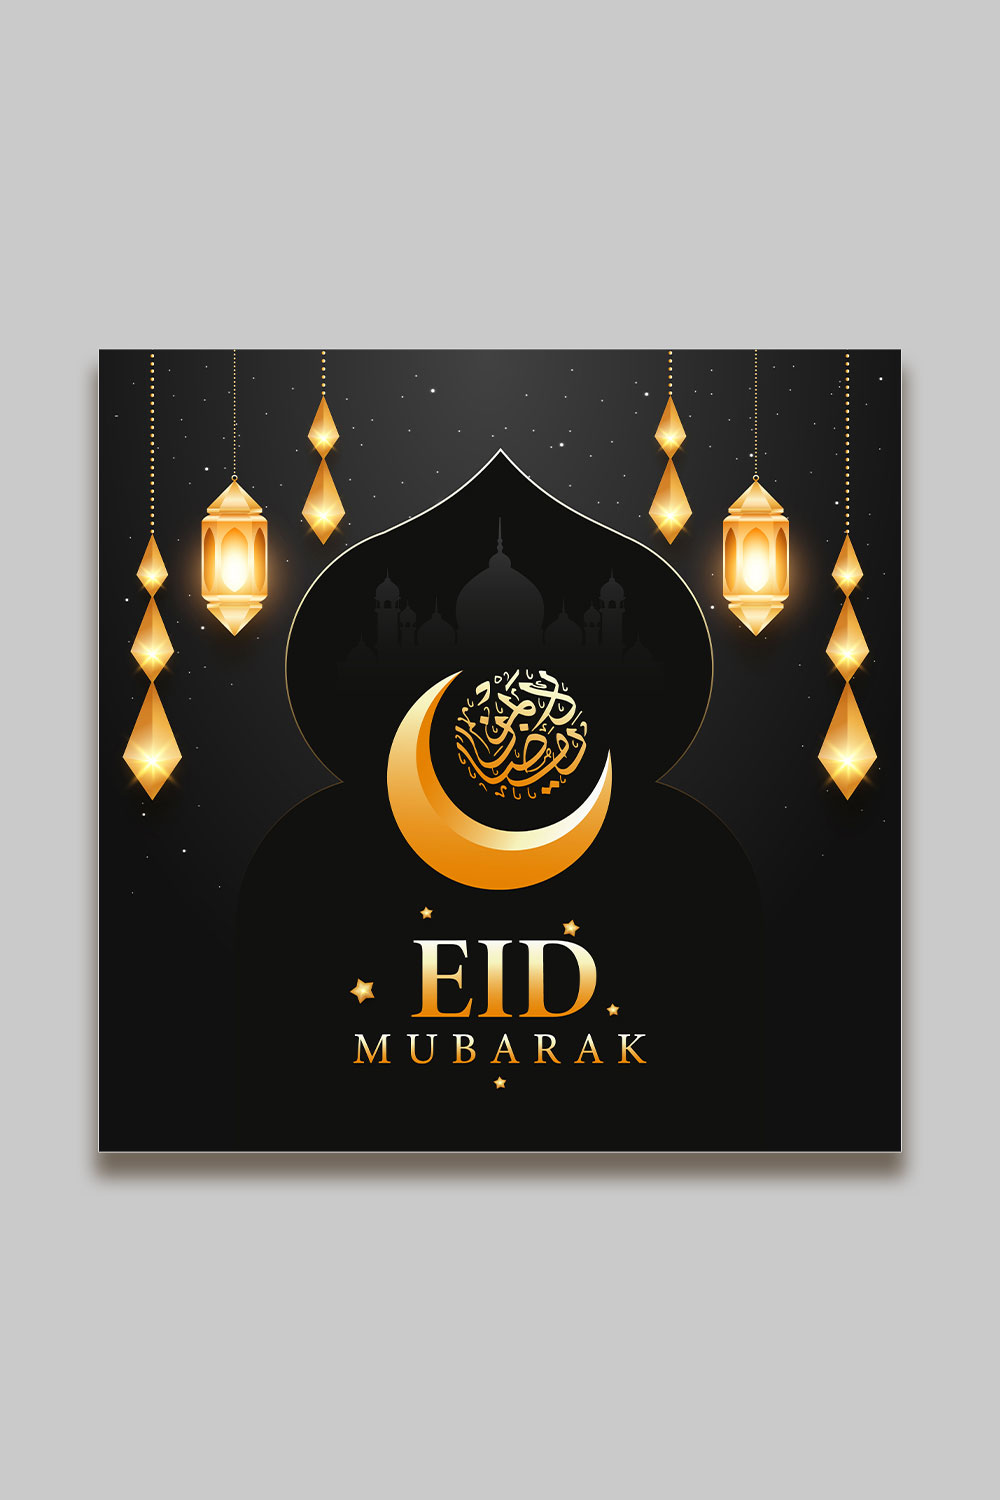 Eid Mubarak pinterest preview image.